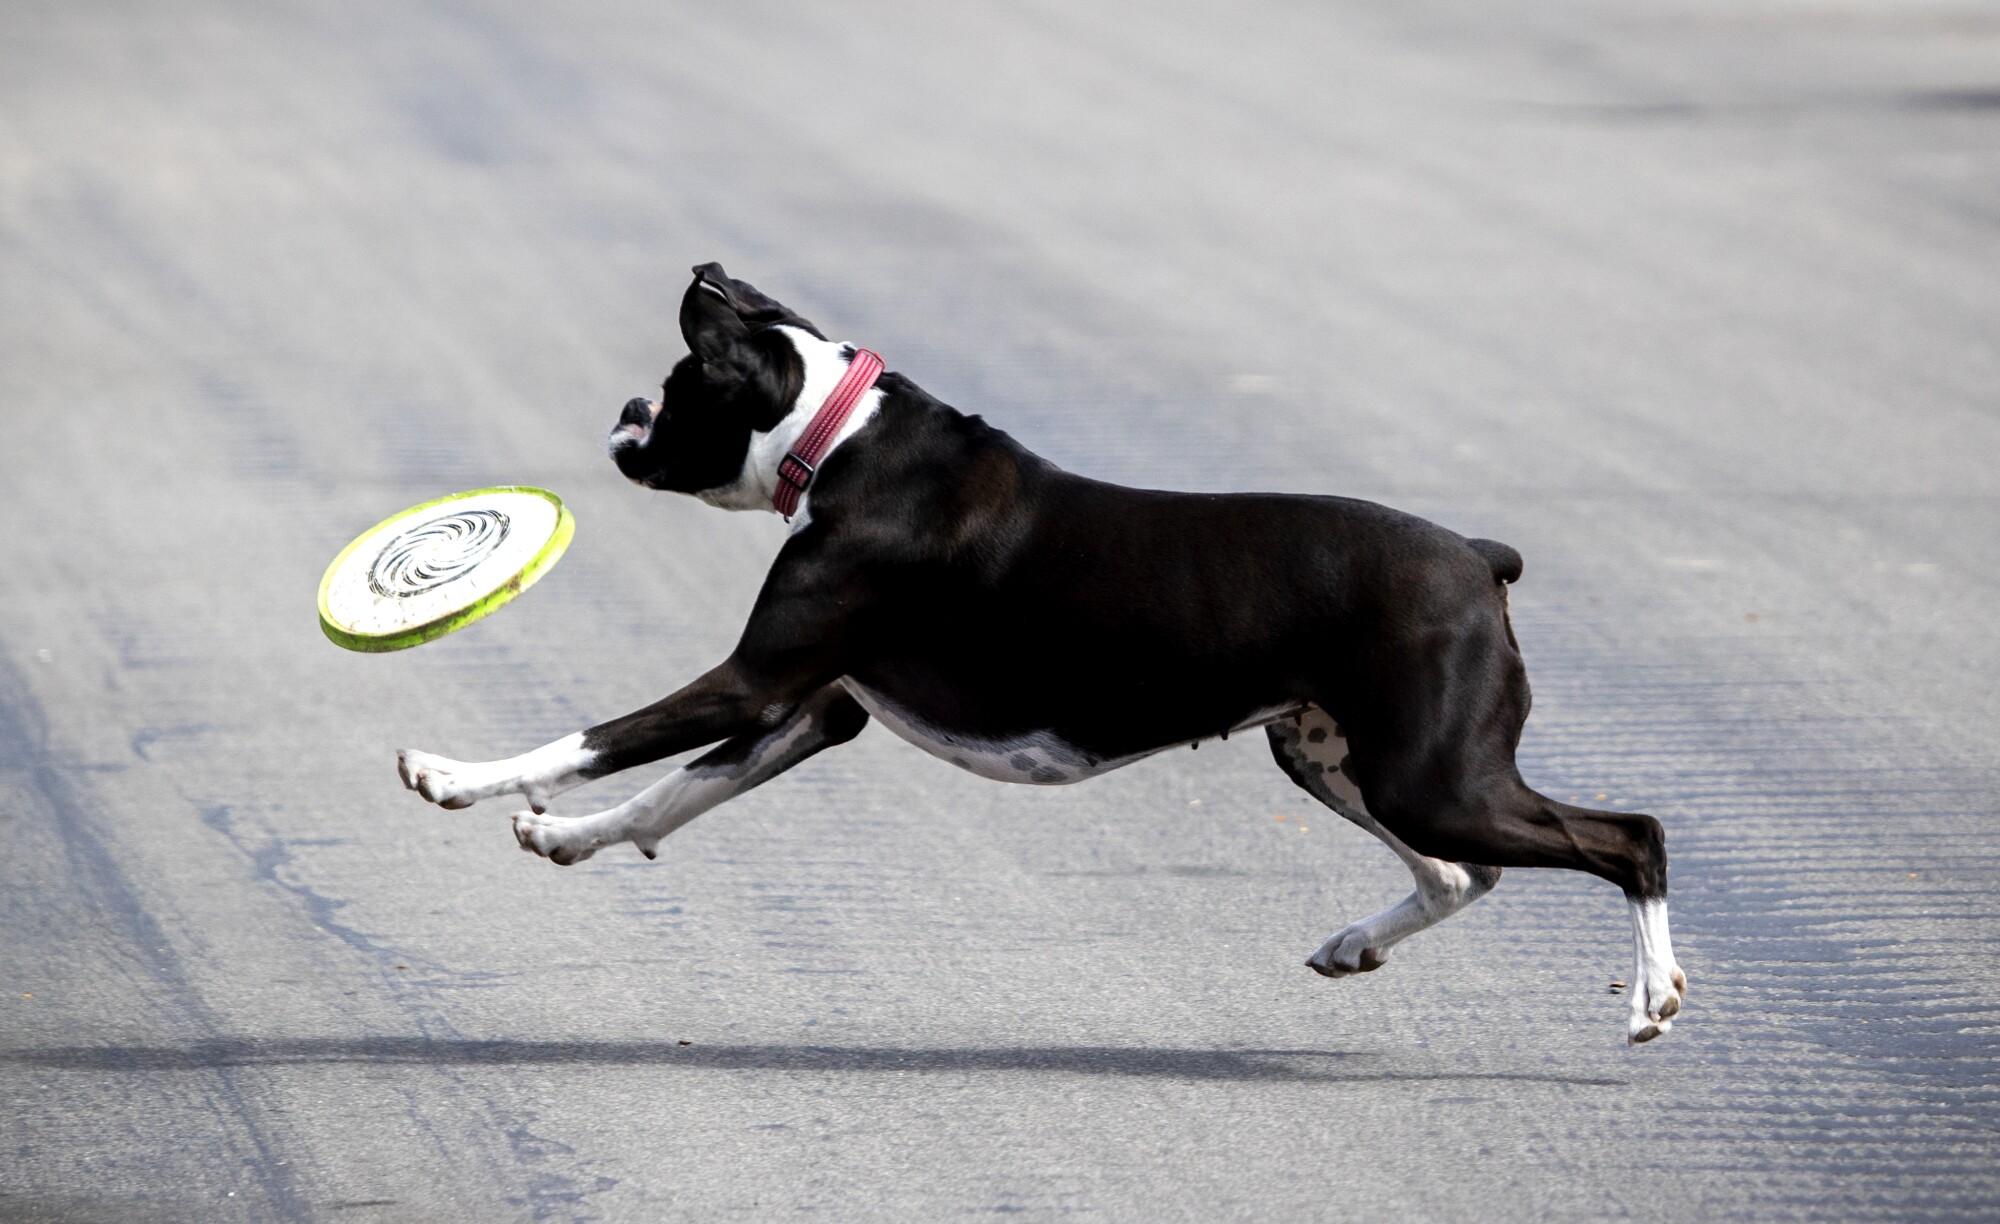 Mark and Tami Burnett throw a Frisbee at their dog, Emi